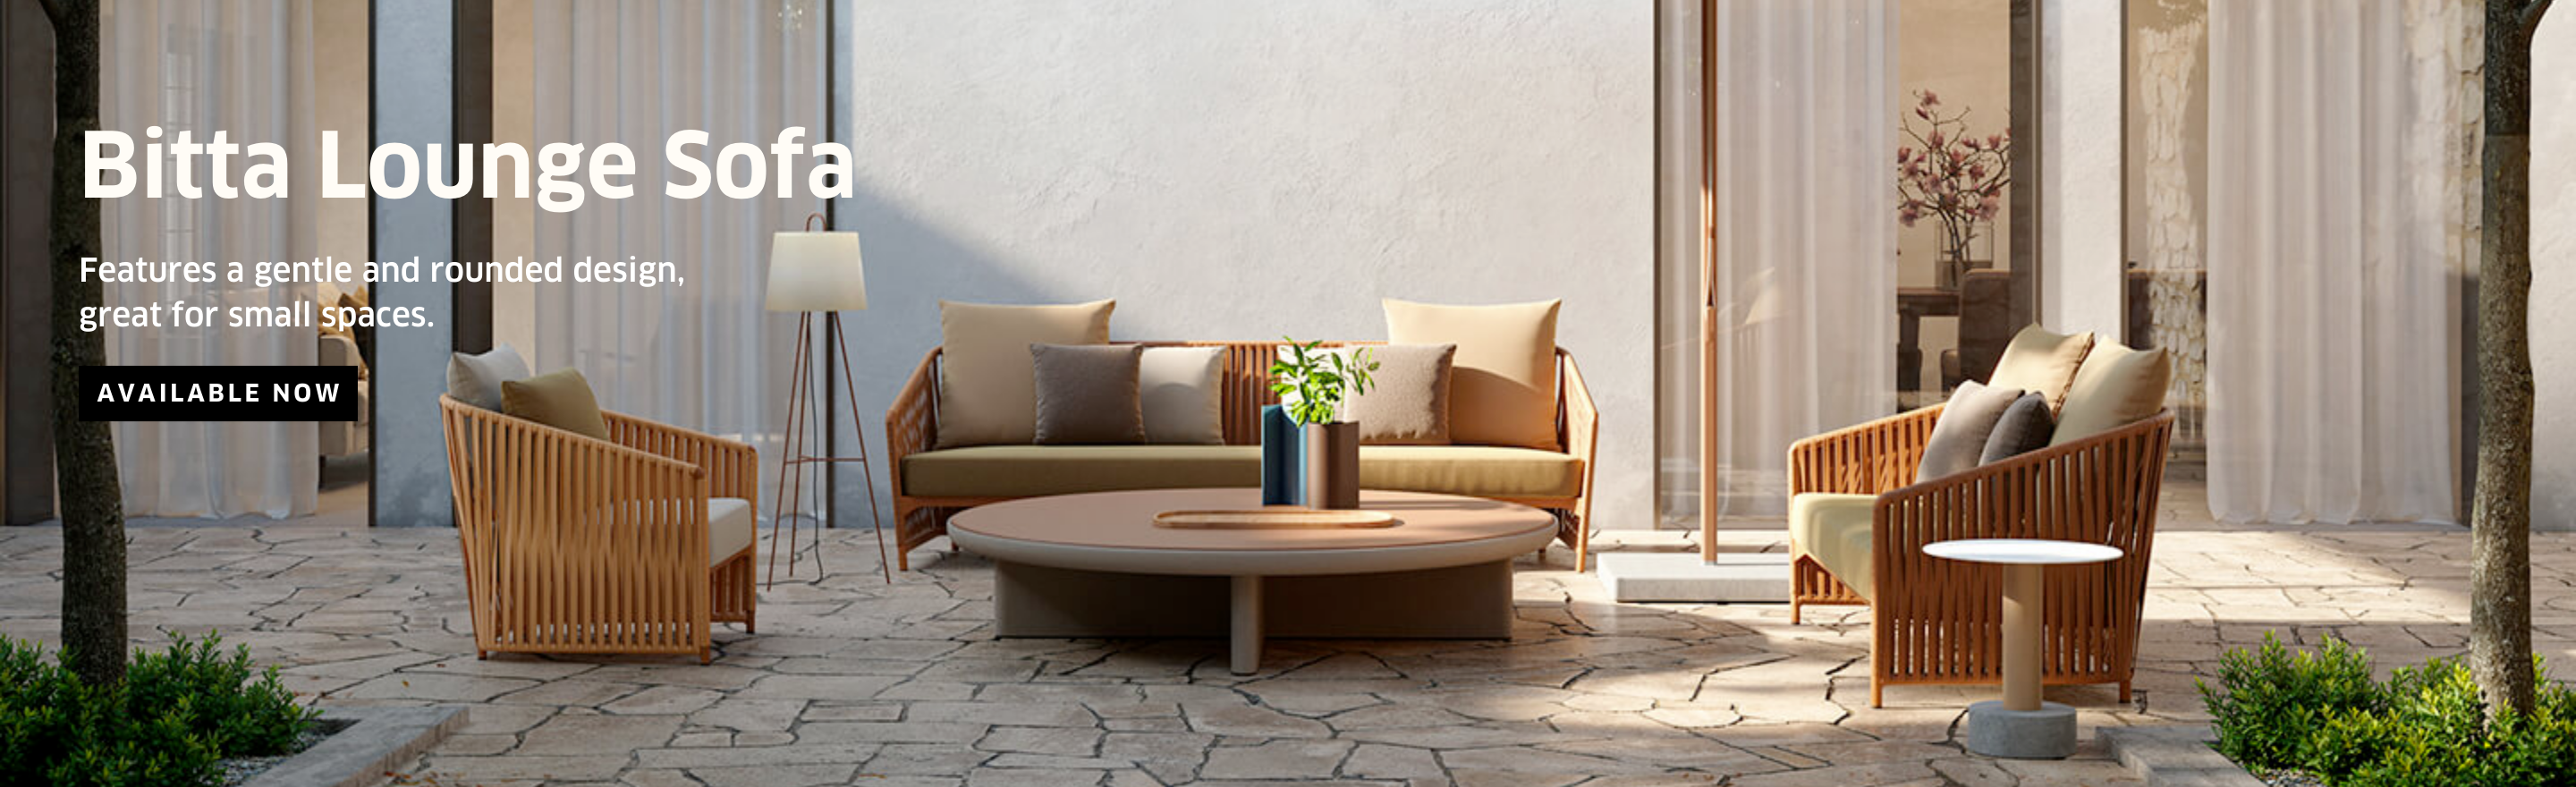 Luxury Furniture | Kettal | Outdoor Furniture | Outdoor Sofa | TRAX Furniture Malaysia